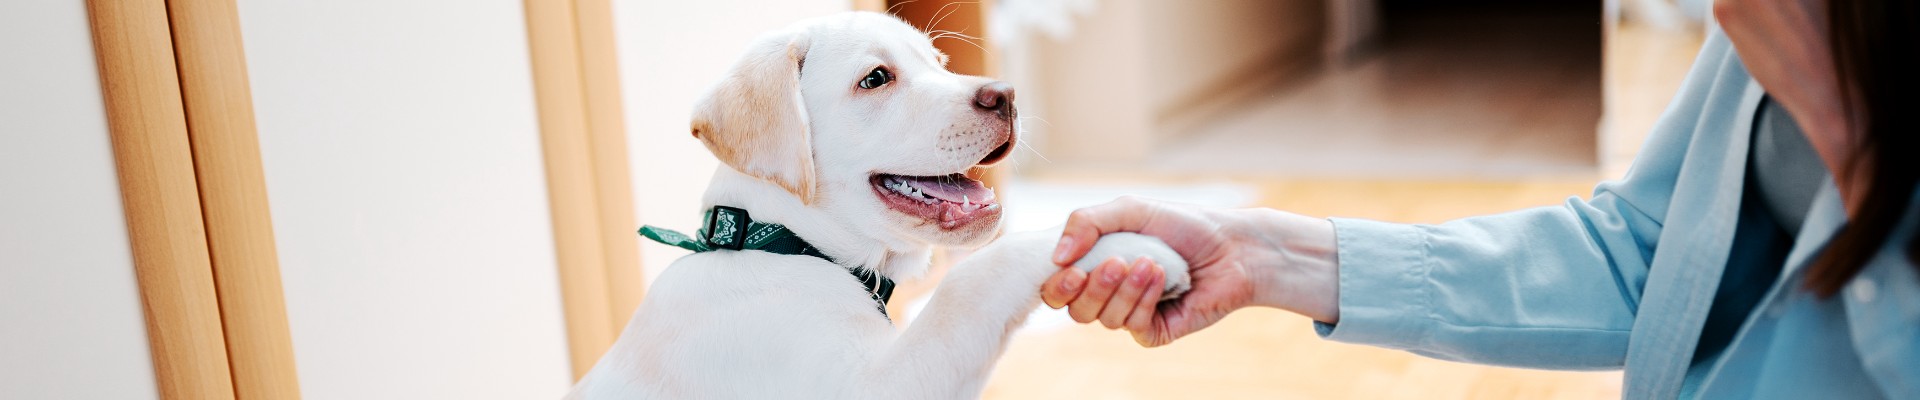 smiling white dog shakes hands